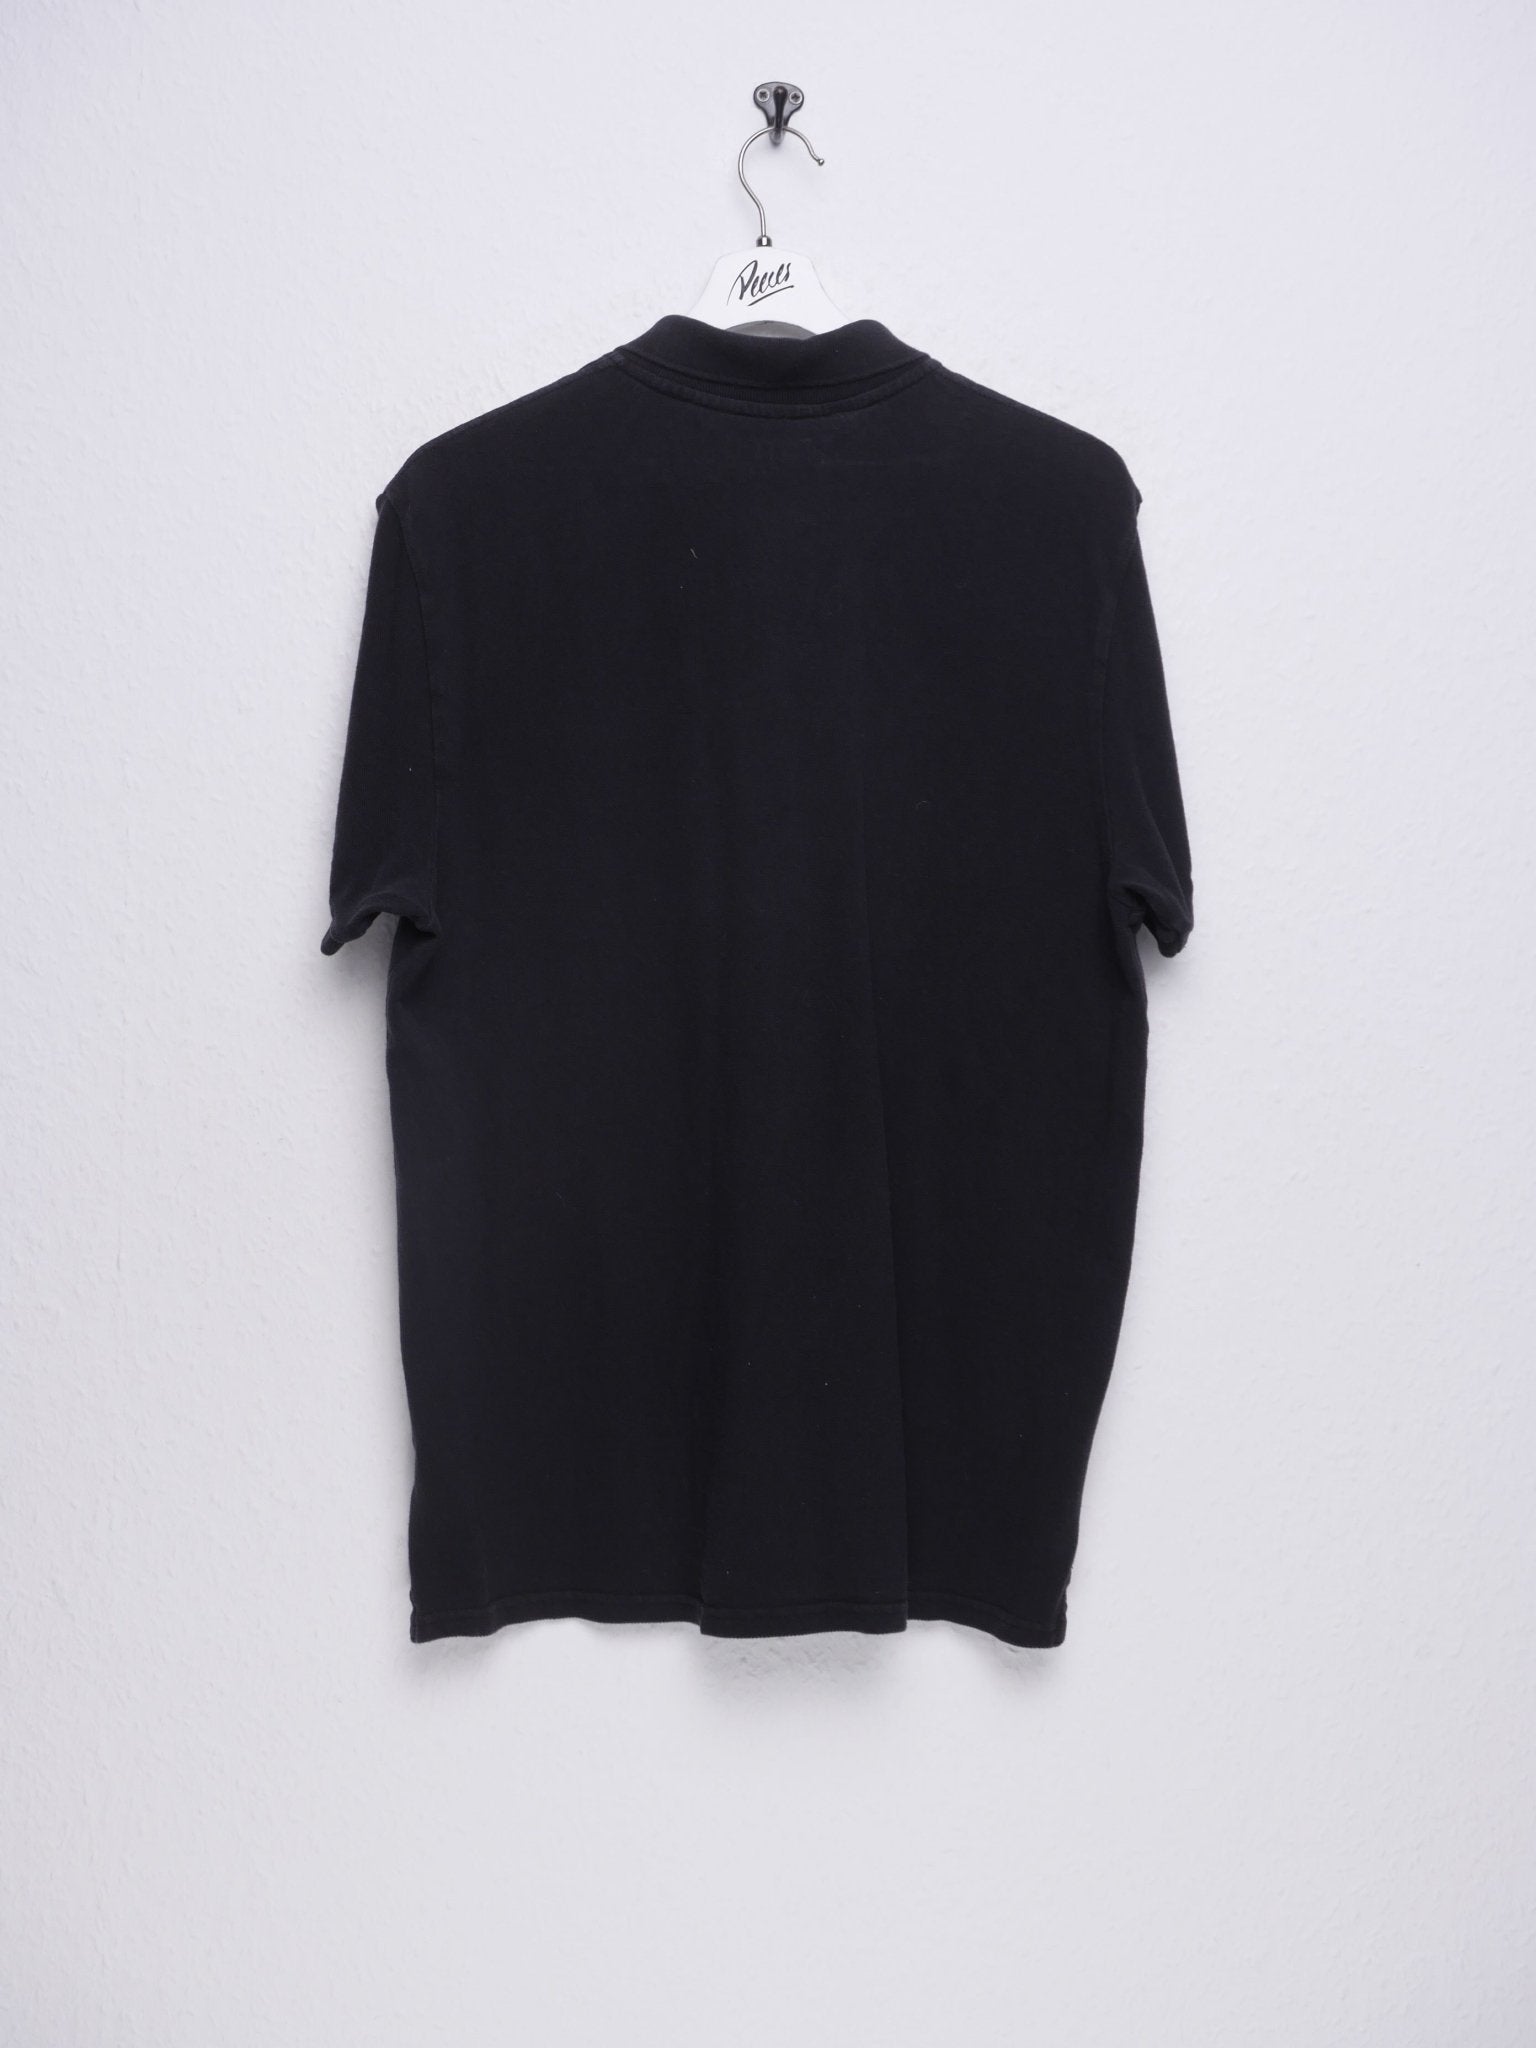 Classic plain black Polo Shirt - Peeces